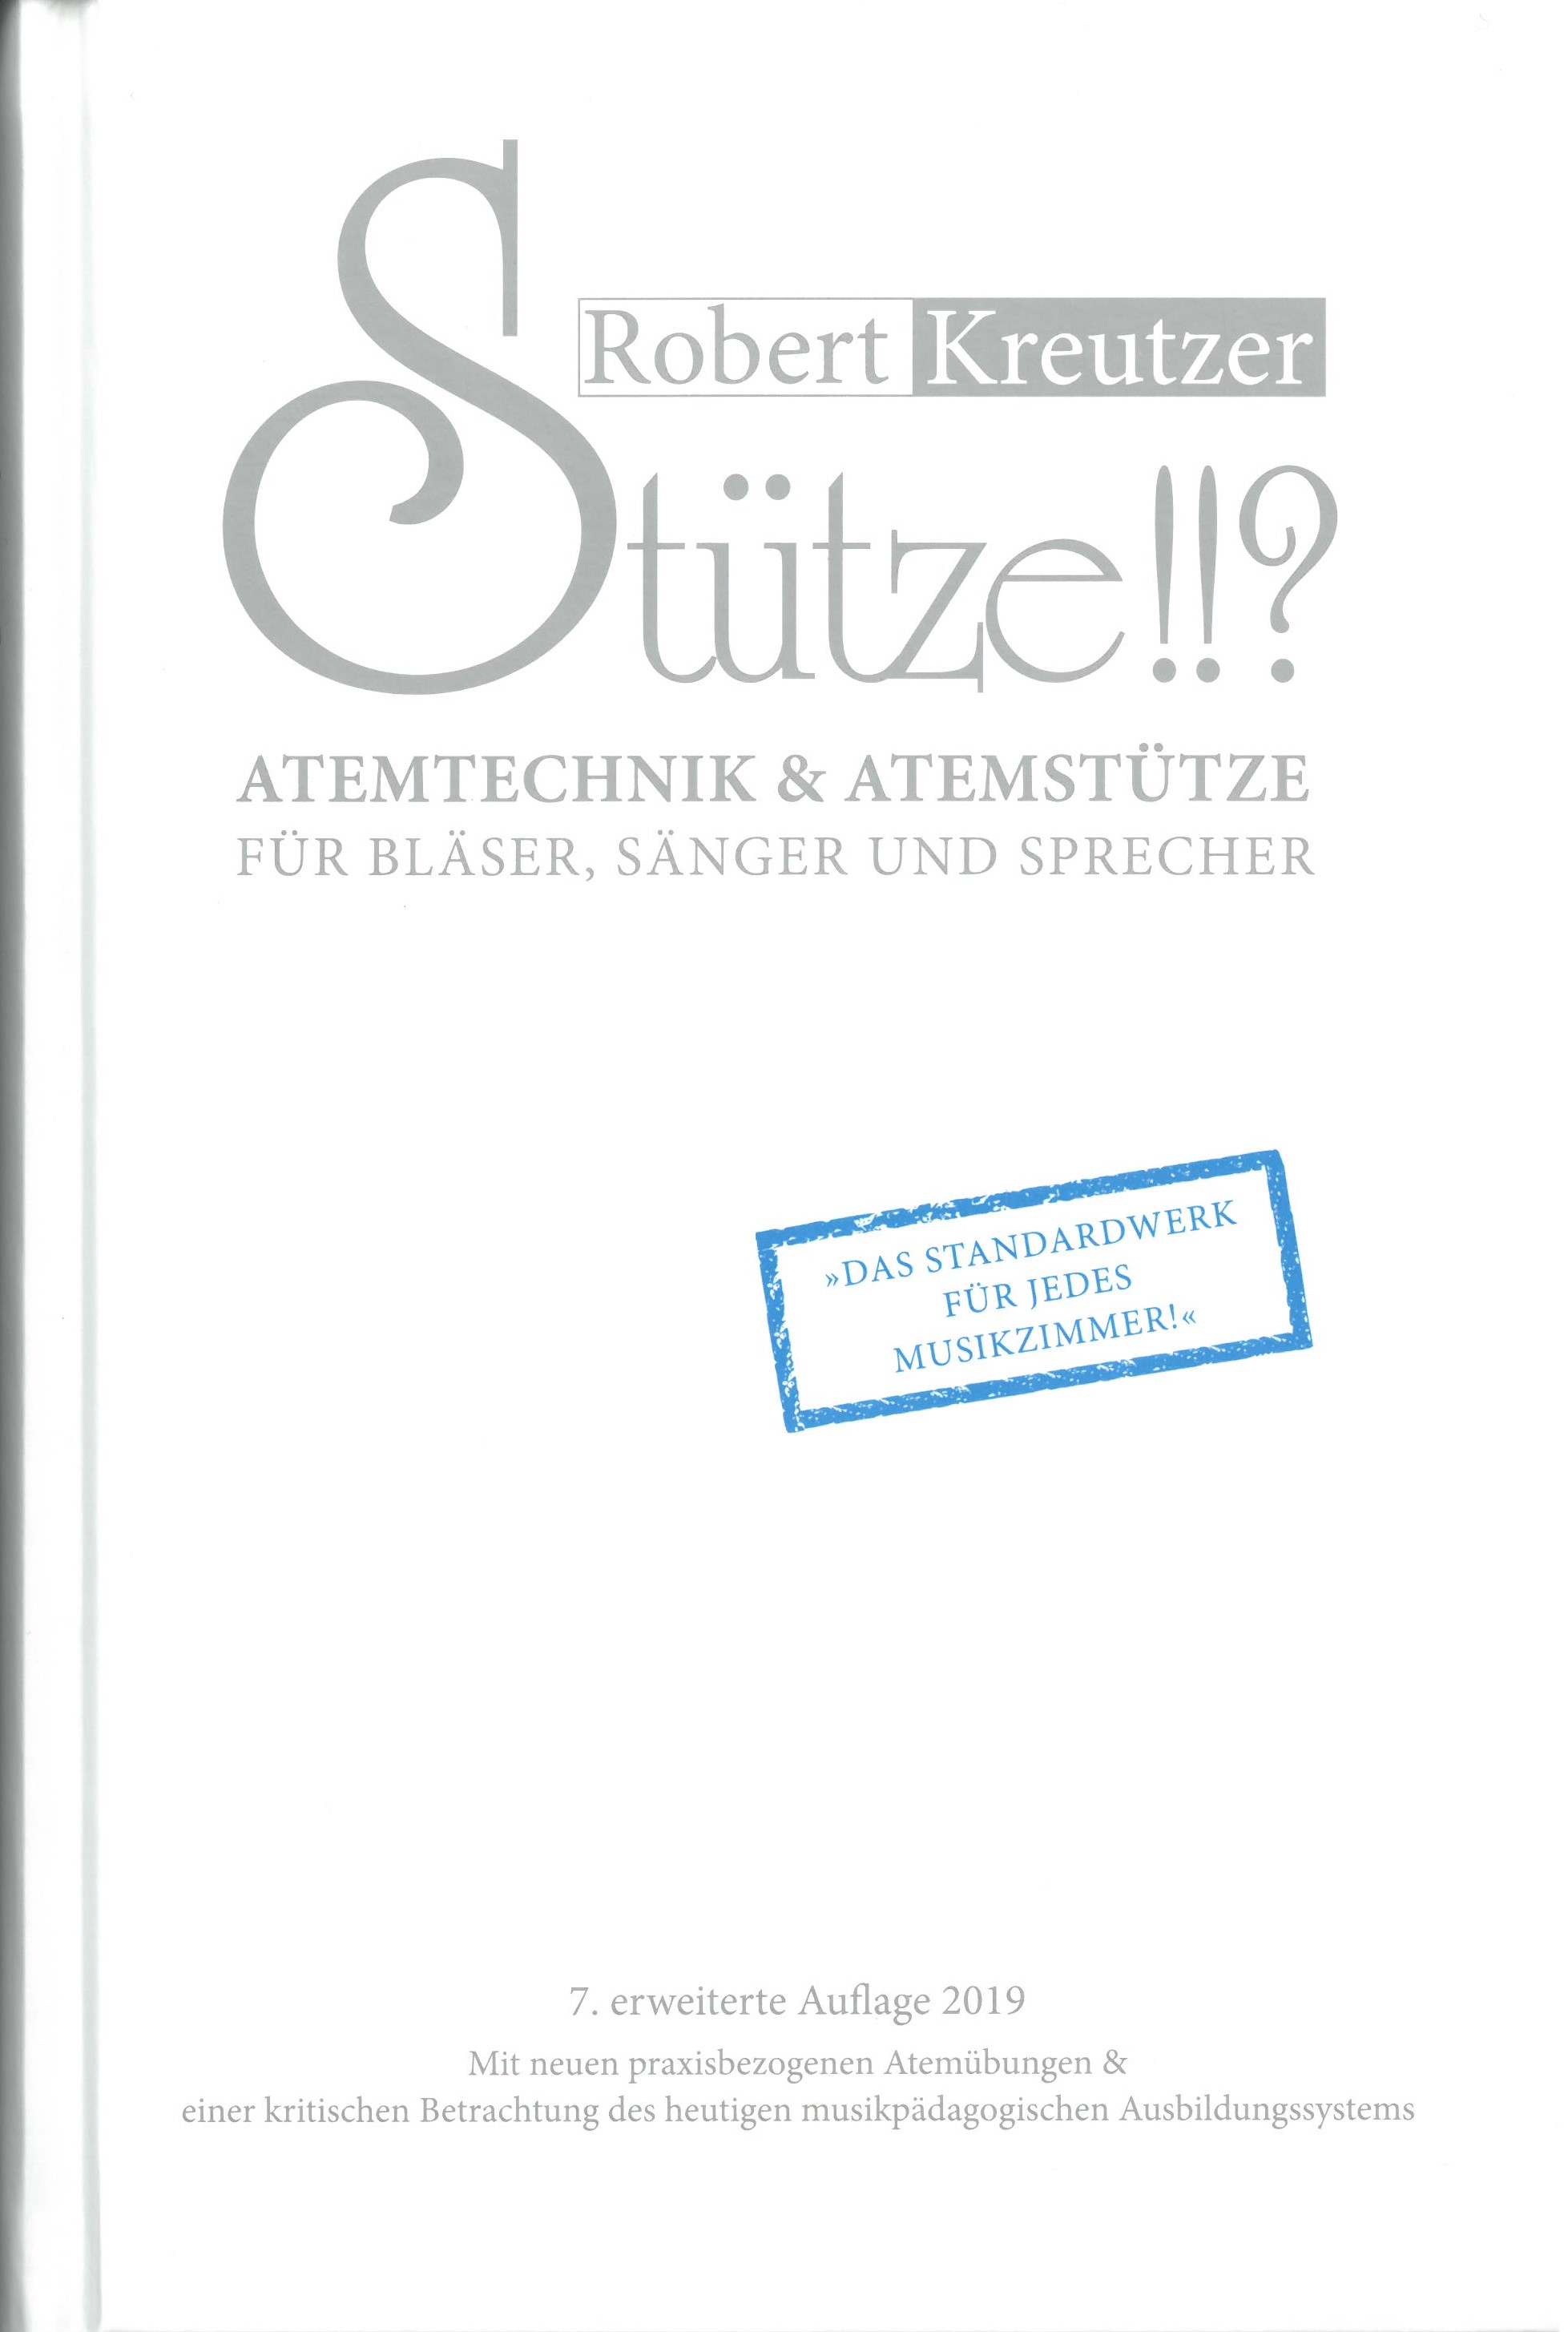 R. Kreutzer: Stütze!!? - Atemtechnik +<br>Atemstütze - Fachbuch